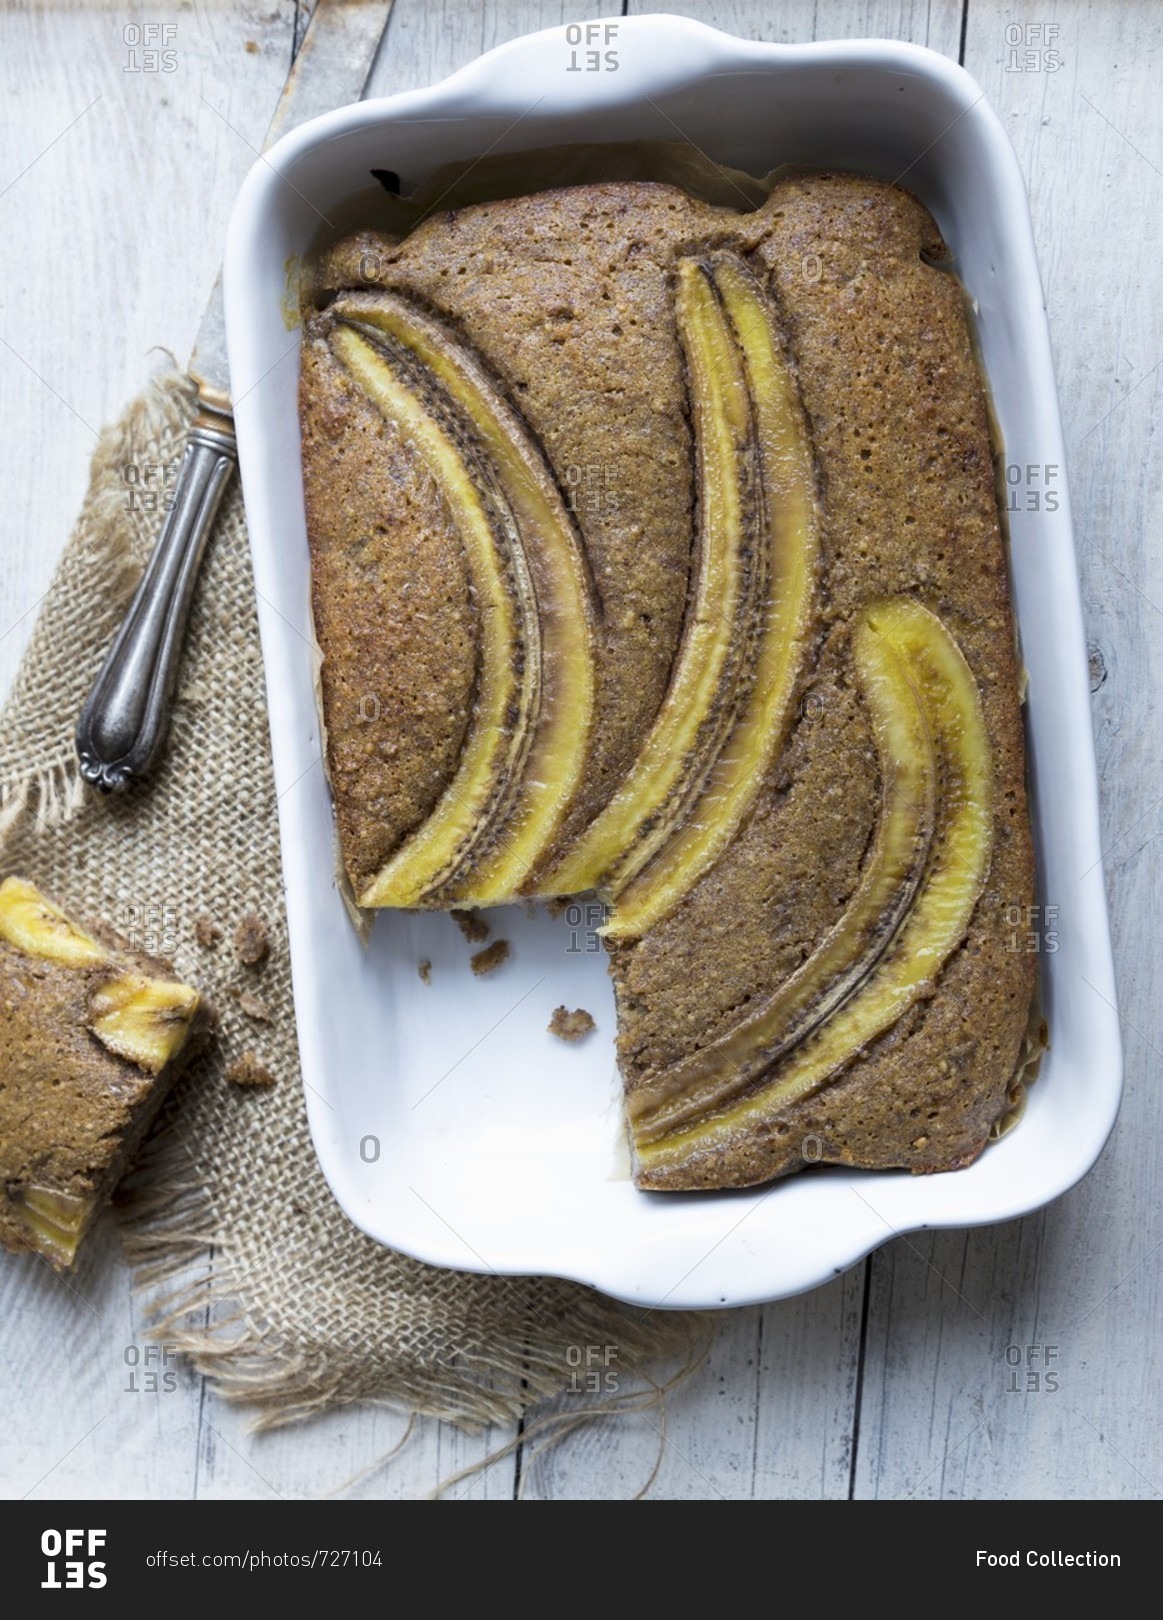 Gluten-free cake buckwheat and banana cake with brown sugar